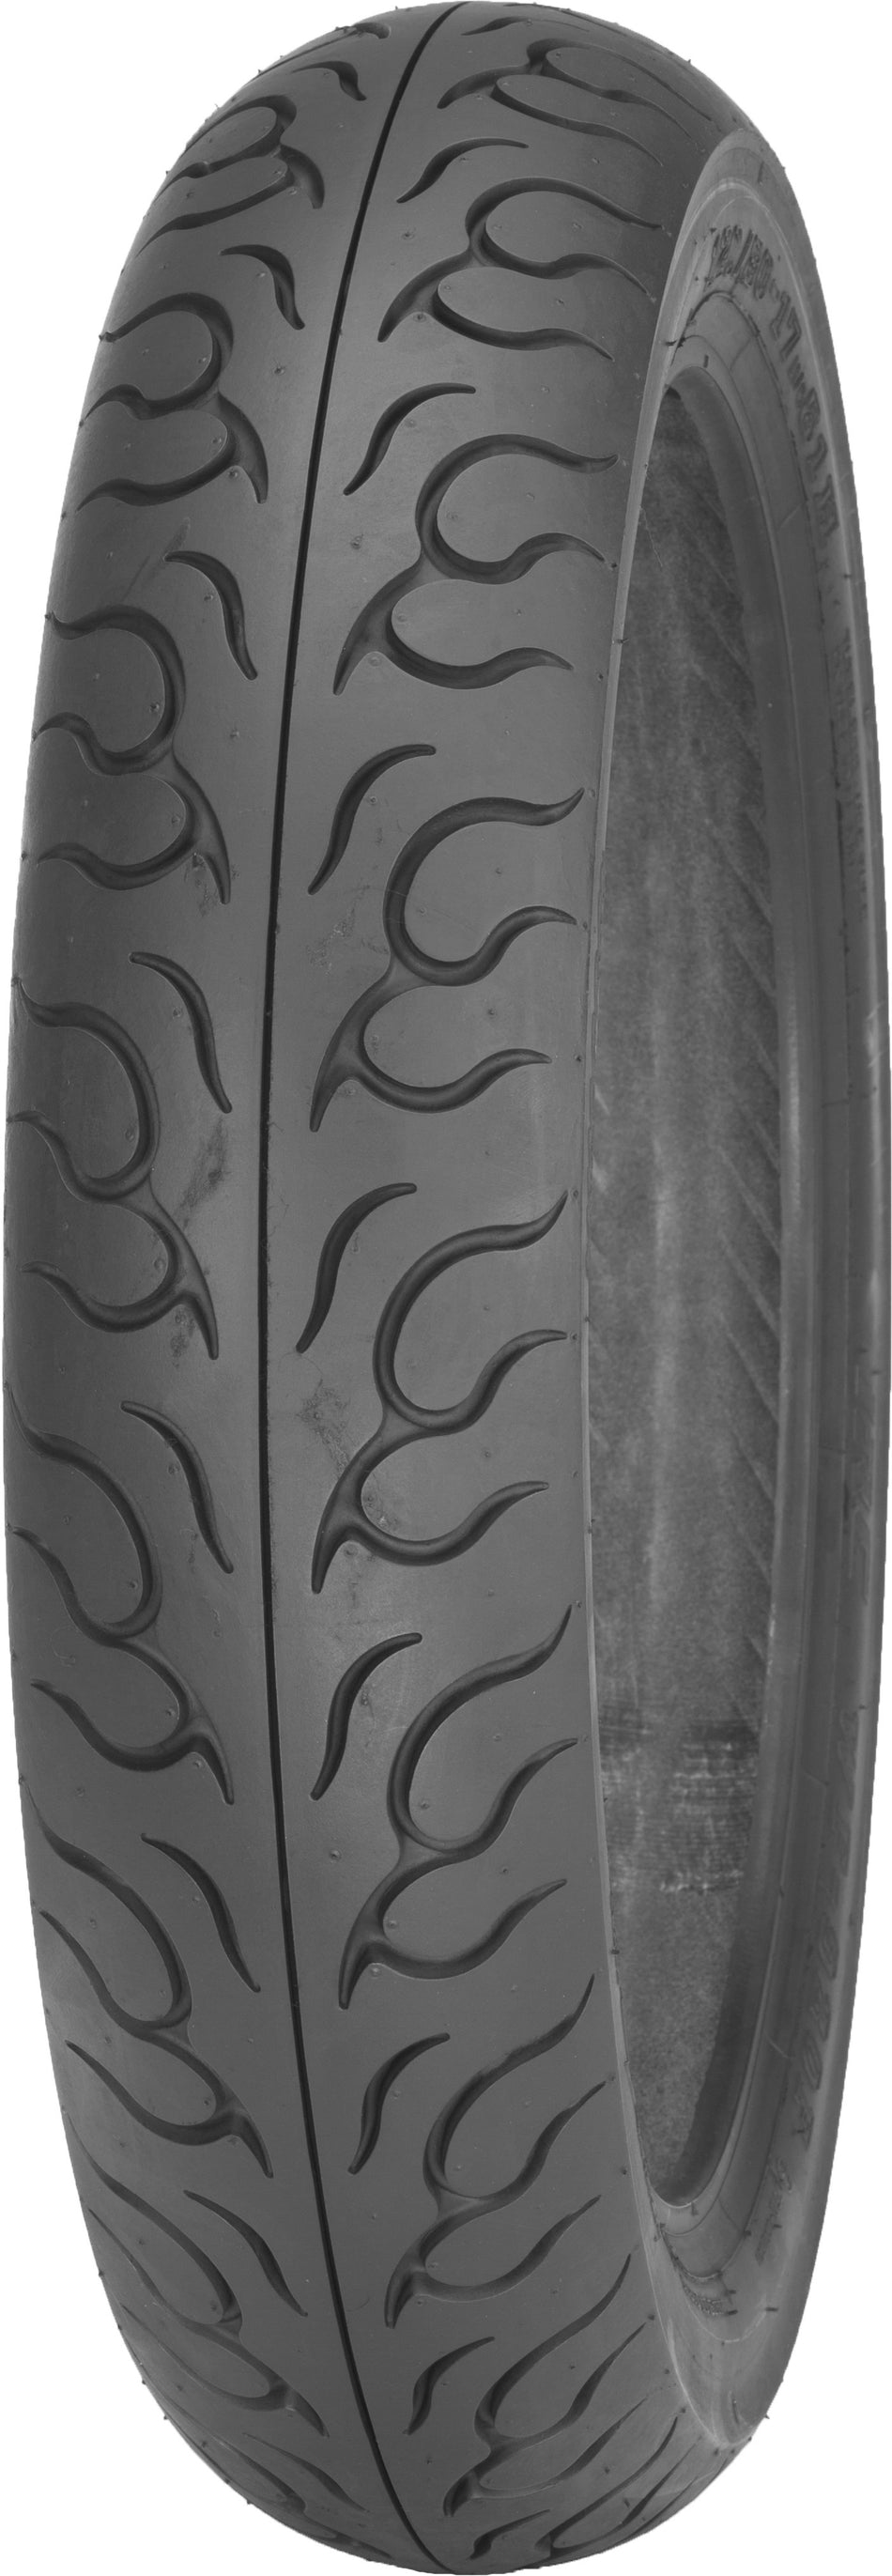 IRC Tire Wf-920 Front 120/90-18 65h Bias 302704